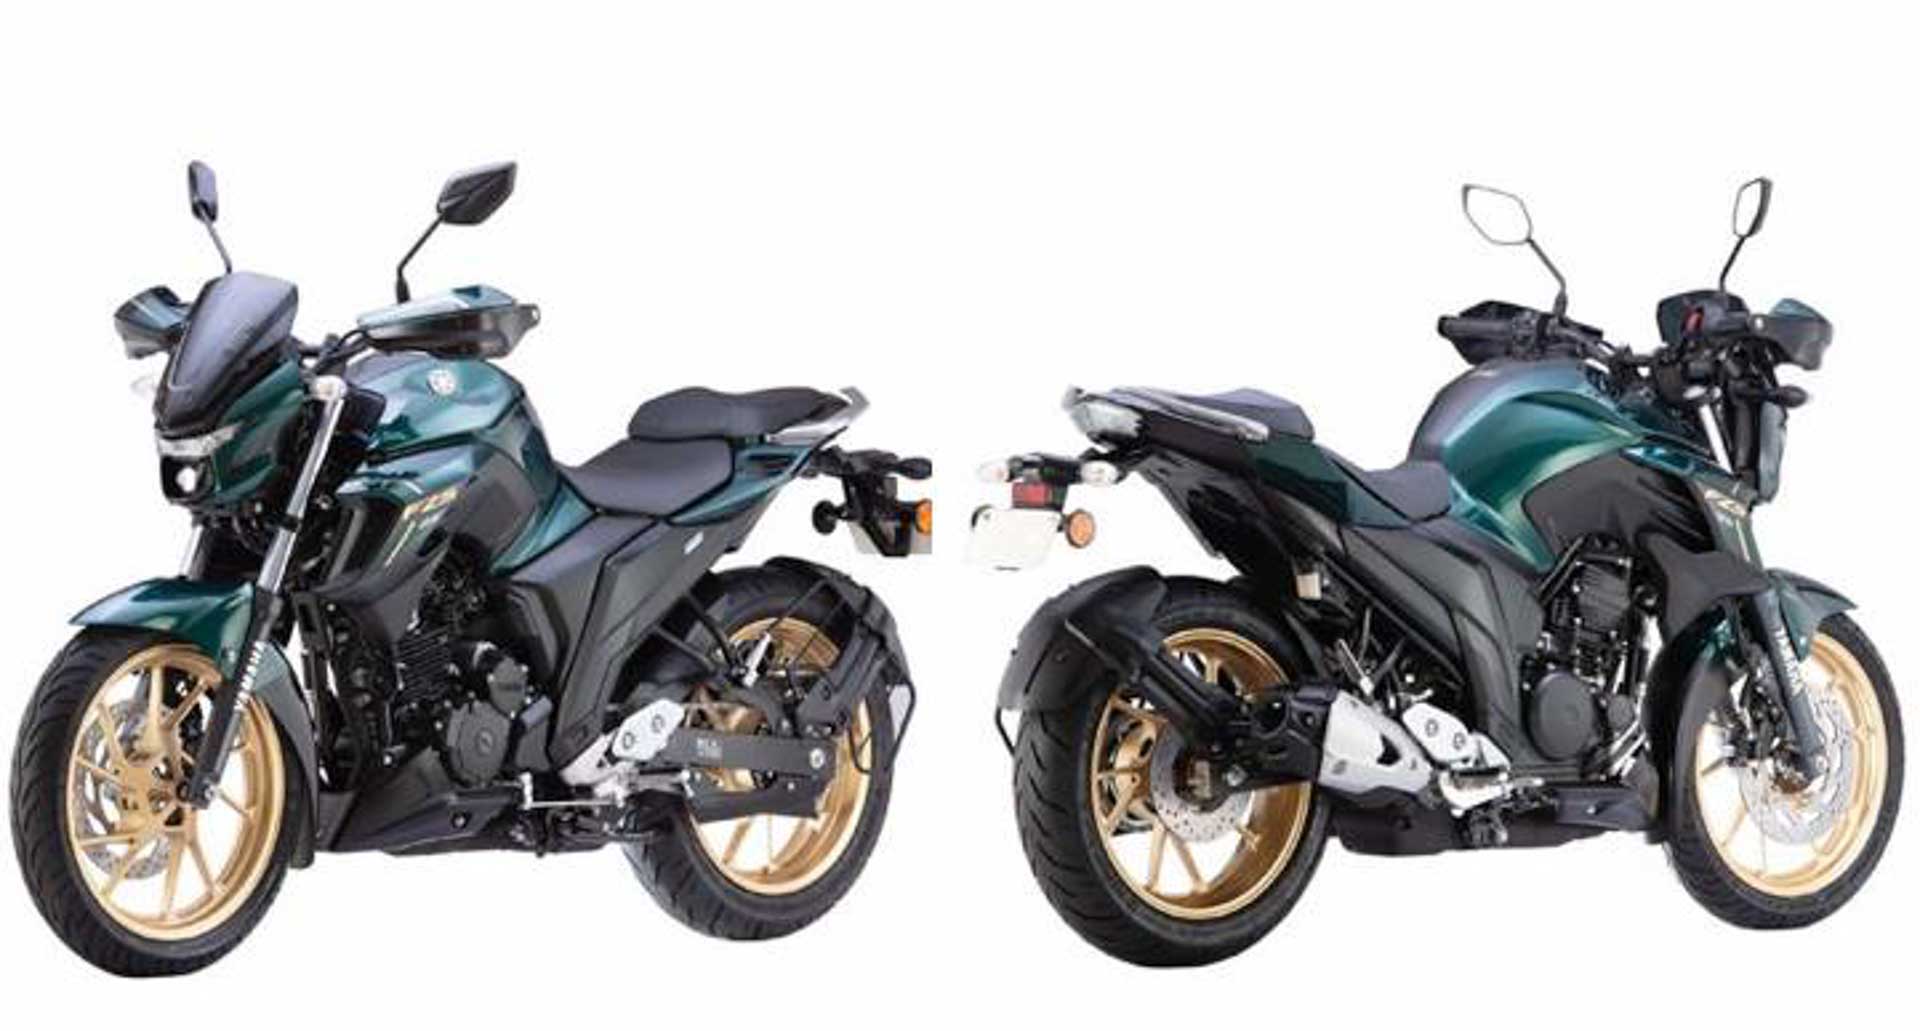 Yamaha Fz 25 250cc 2020 0 Kms - $ 8.250.000 en TuCarro